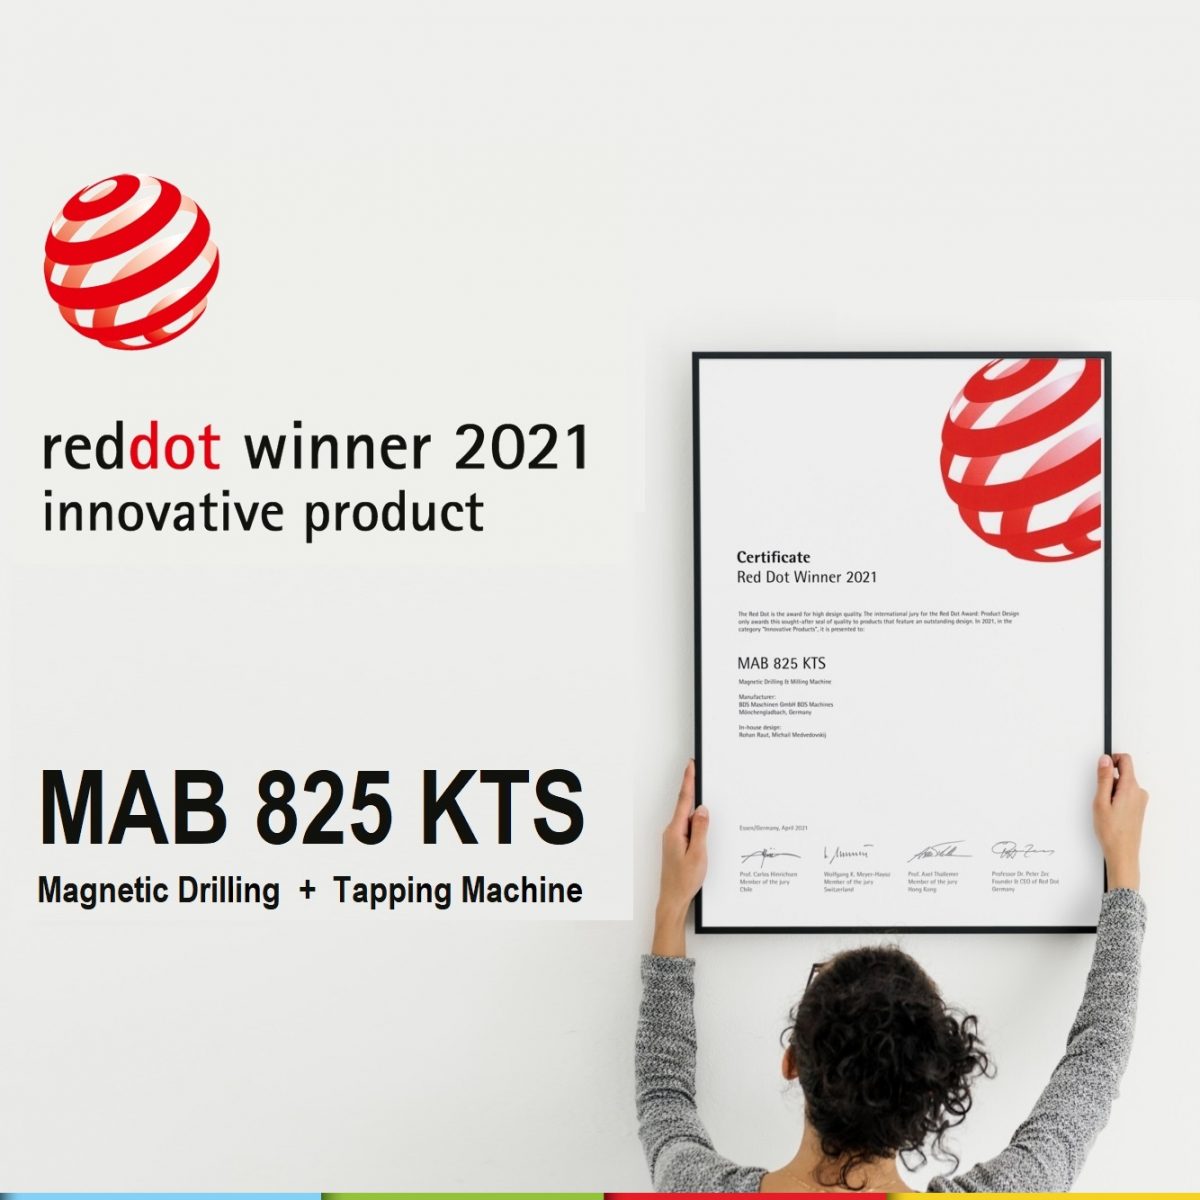 Red Dot Winner innovative product